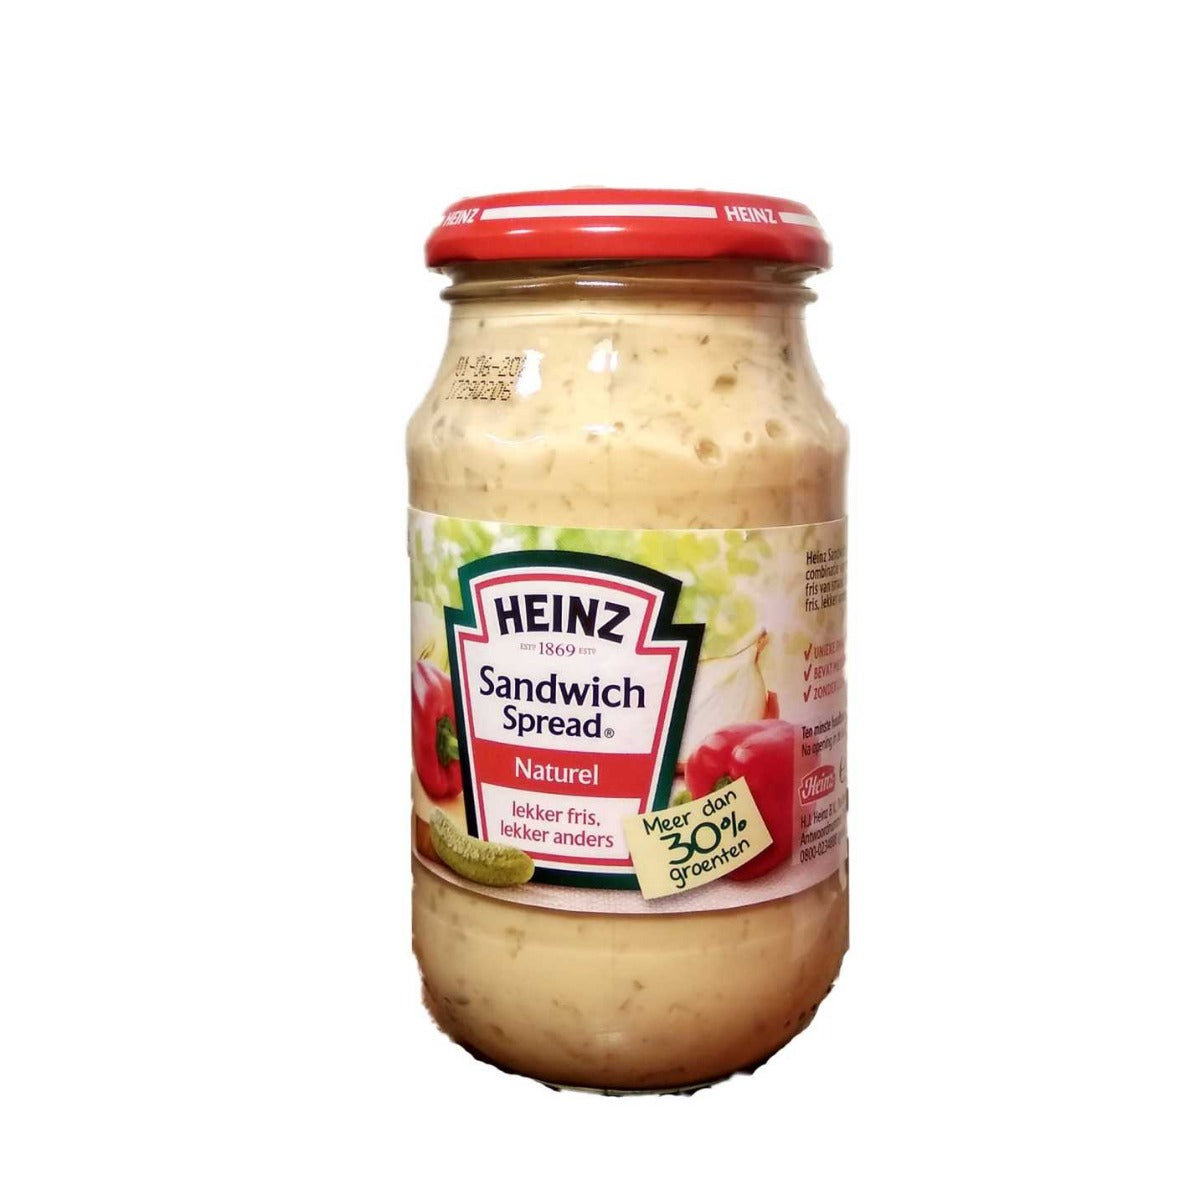 Heinz spread - היינץ ממרח ירקות לסנדוויץ - טעימים